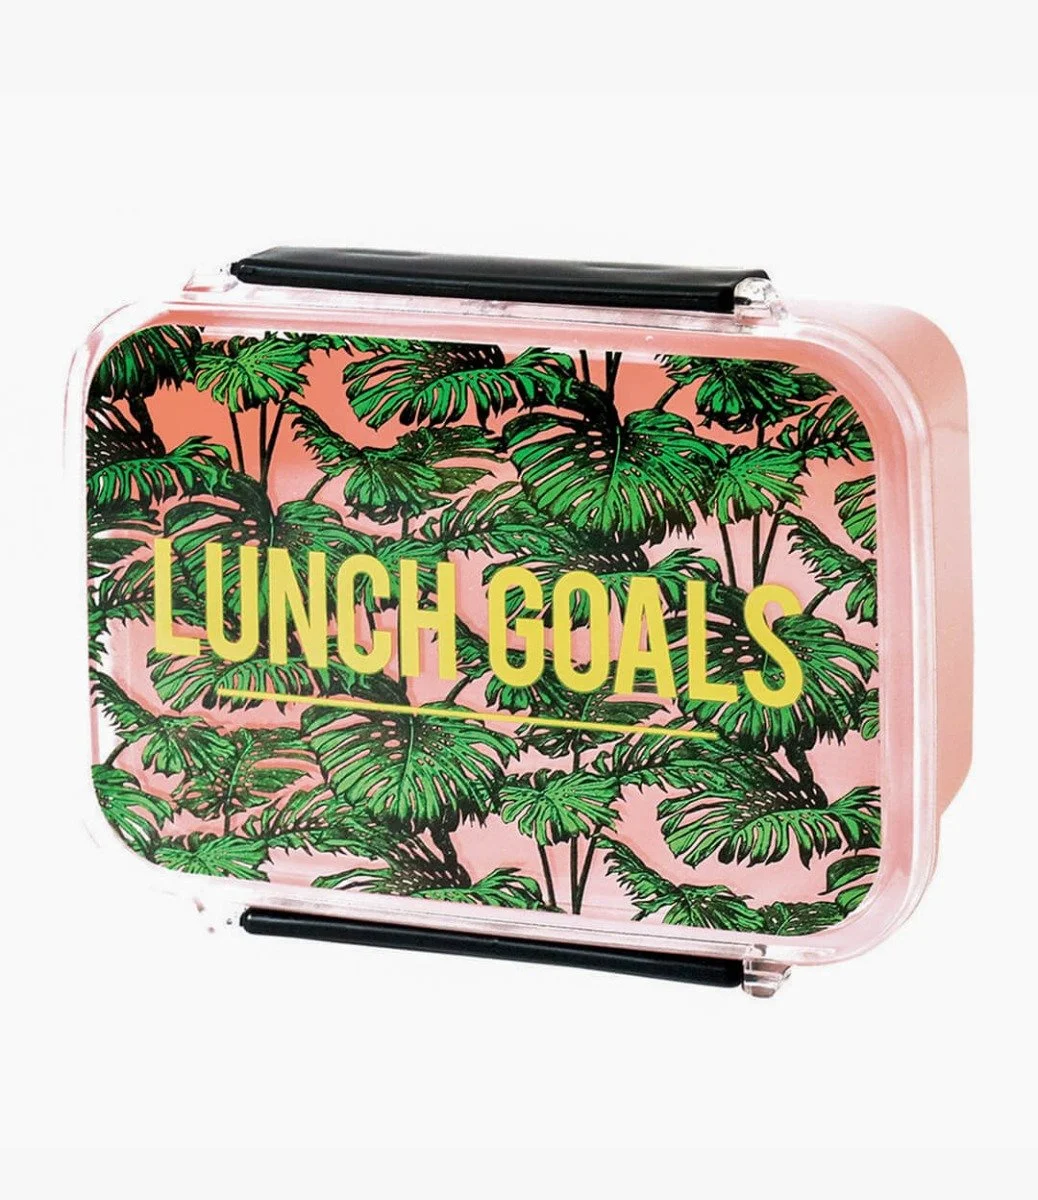 Lunch Box (Lunch Goals) By Alice Scott